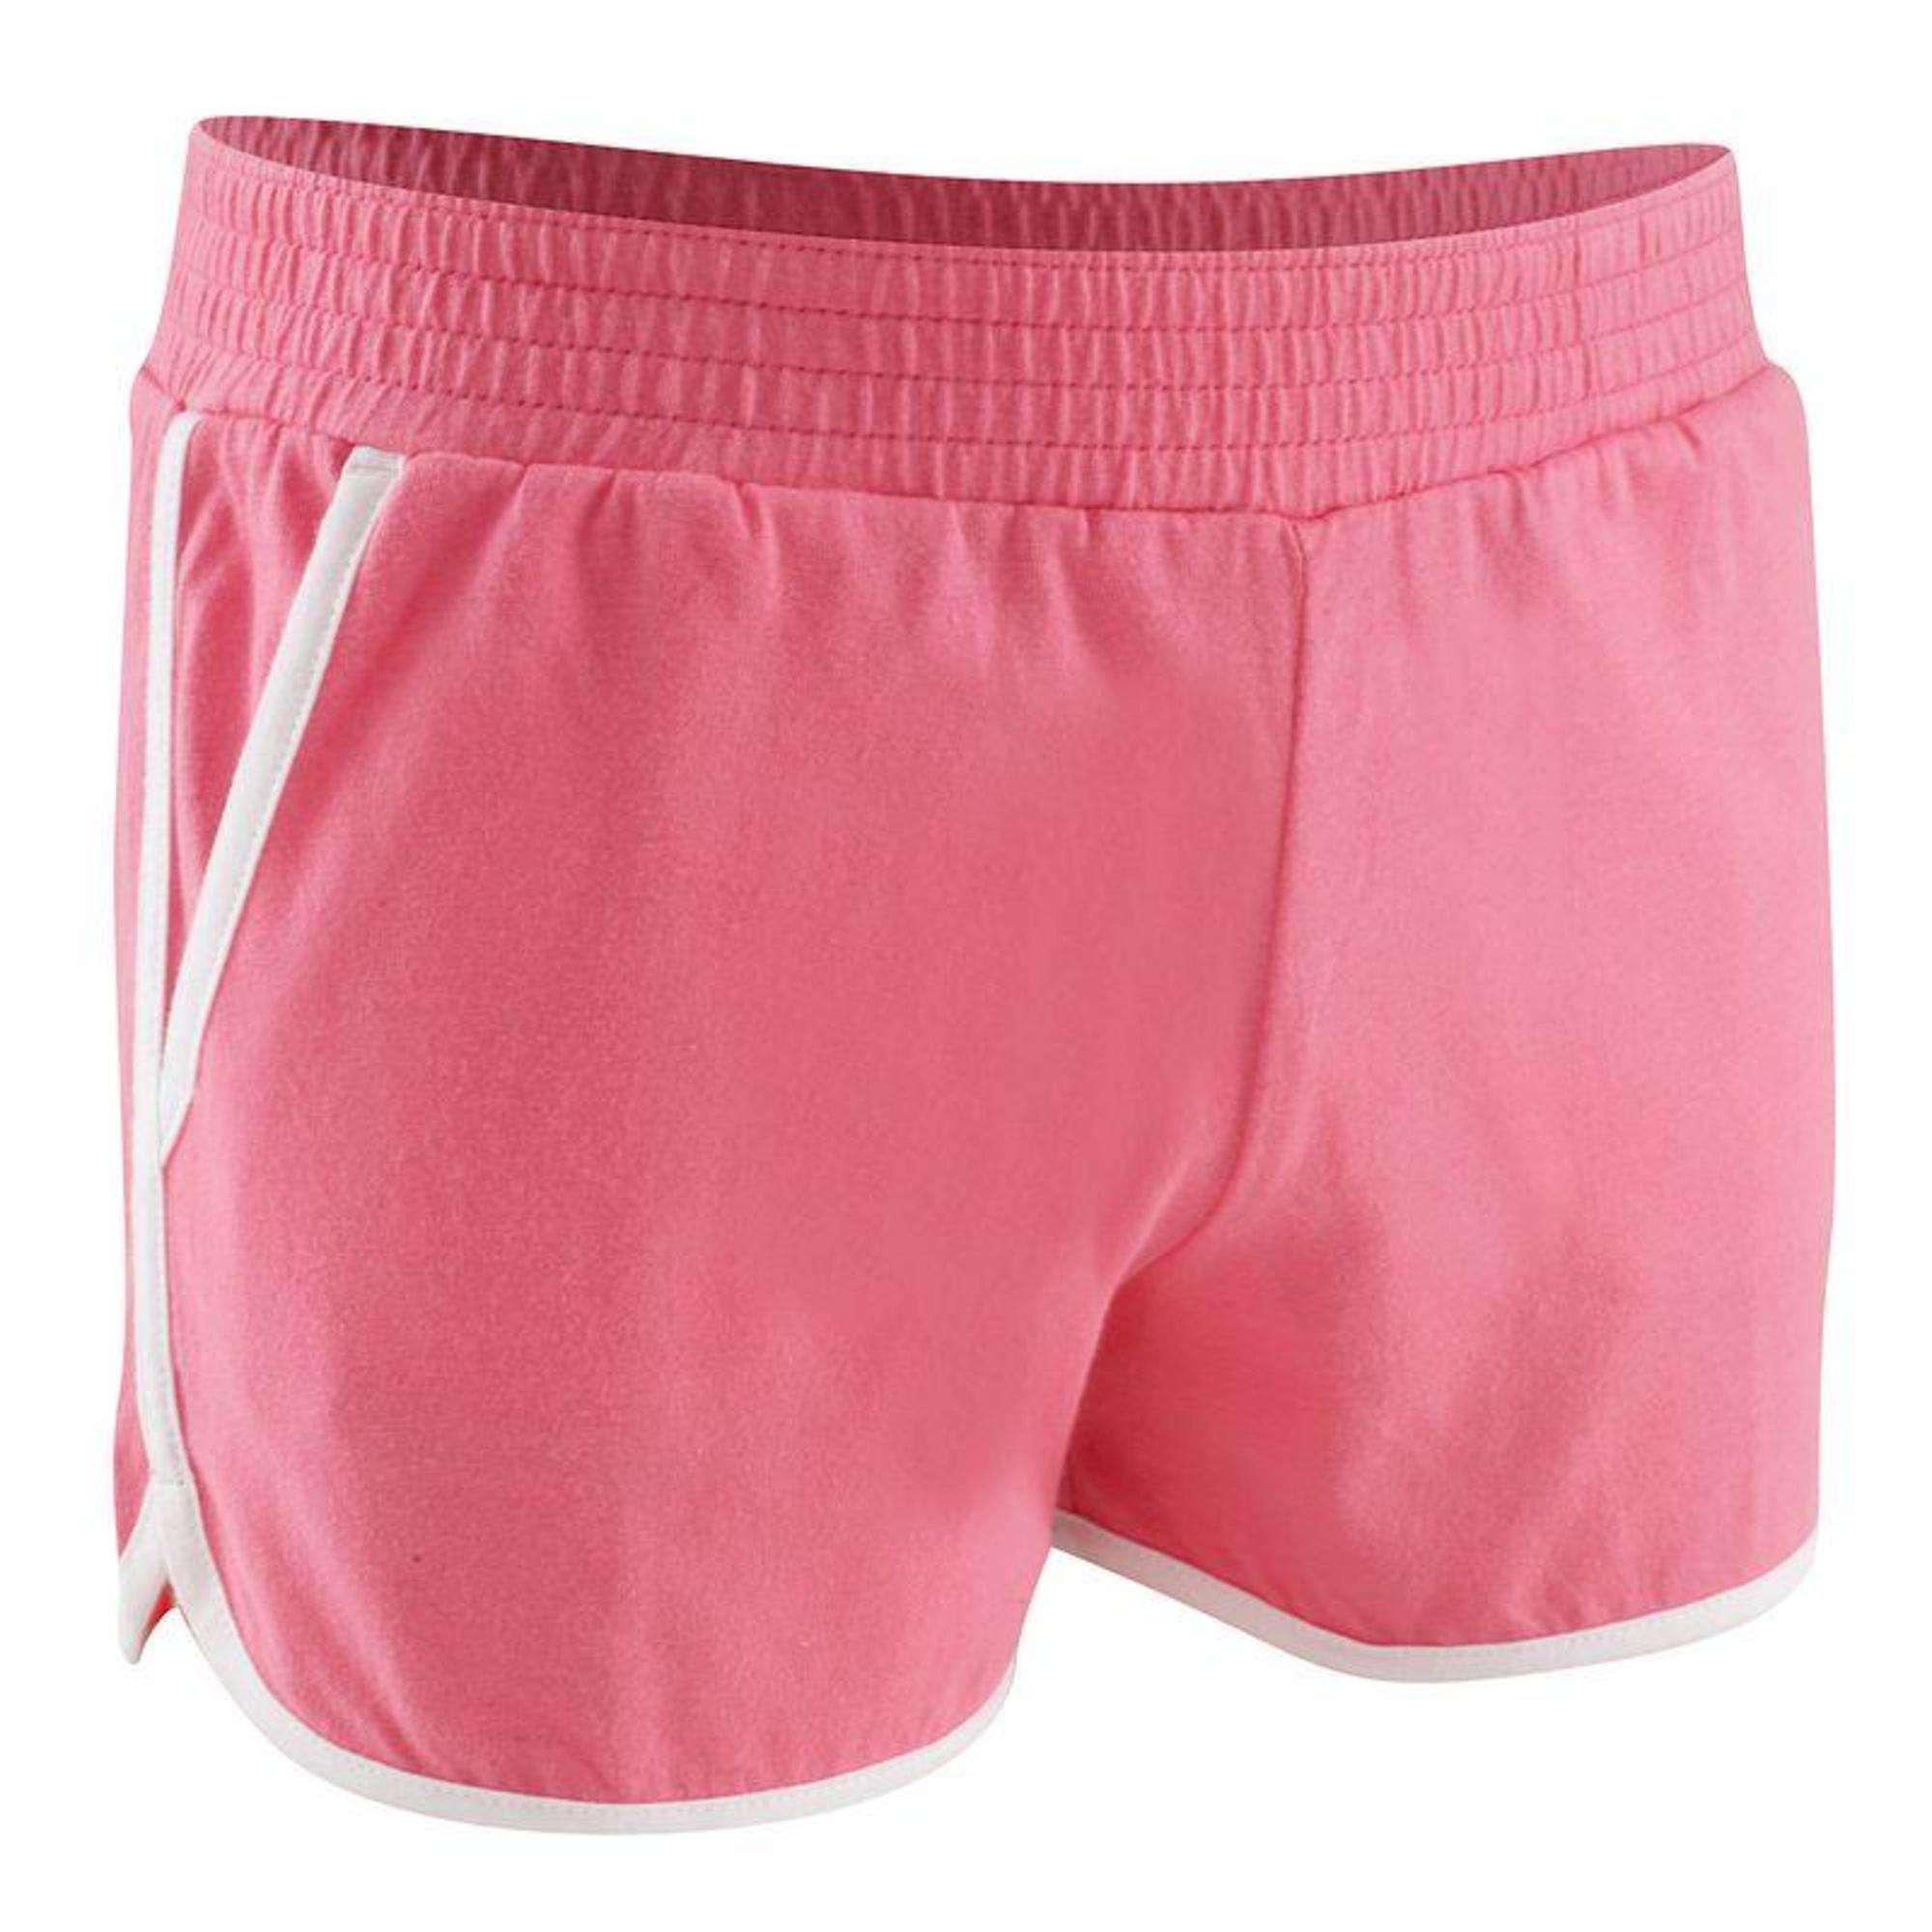 decathlon girls shorts